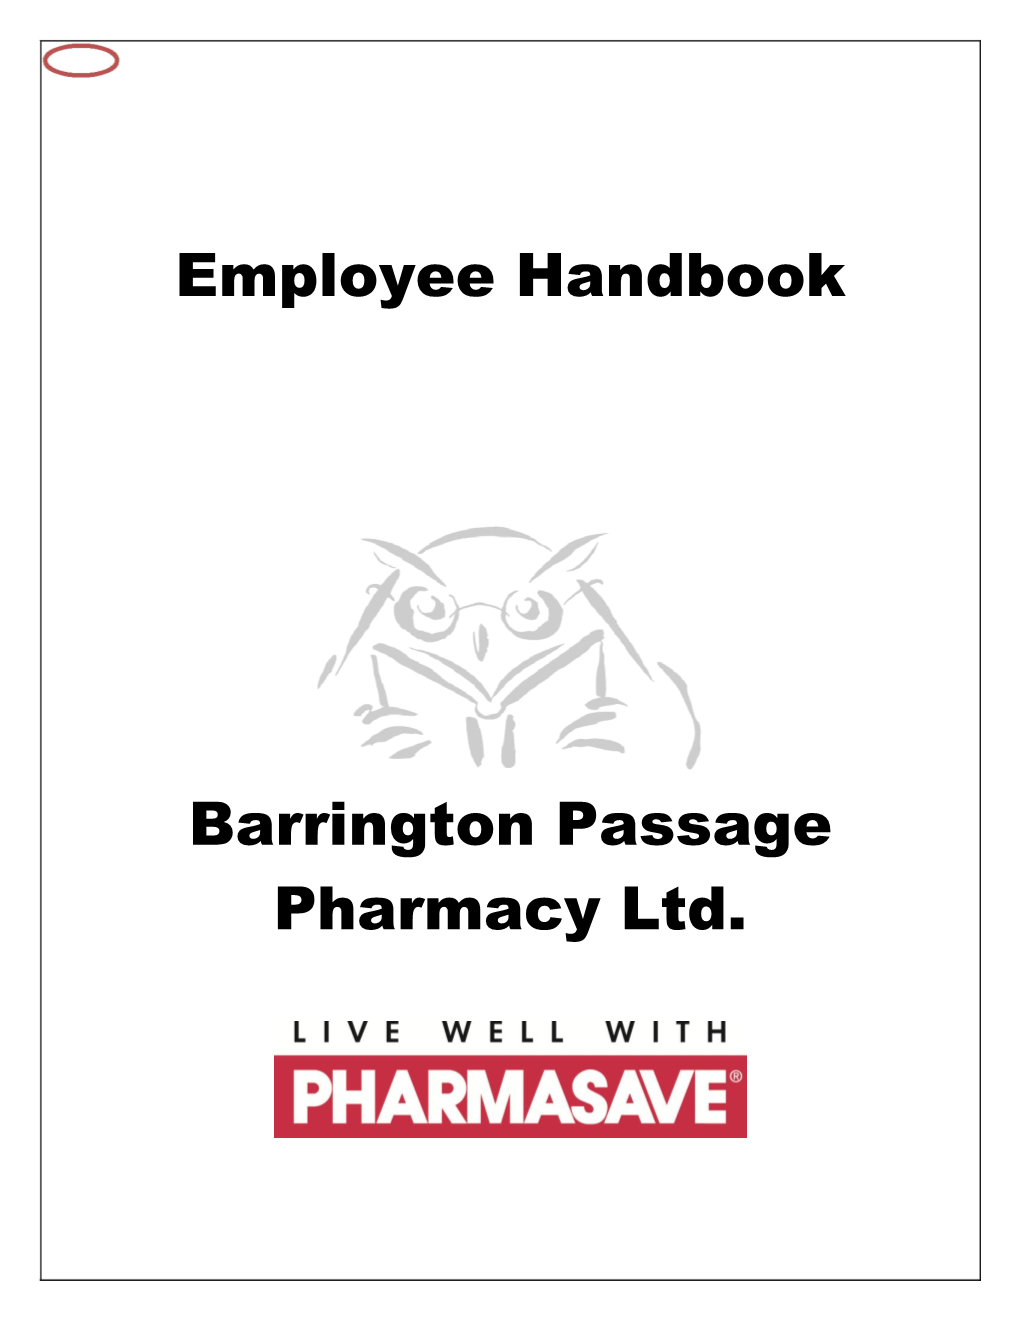 Employee Handbook Barrington Passage Pharmacy Ltd